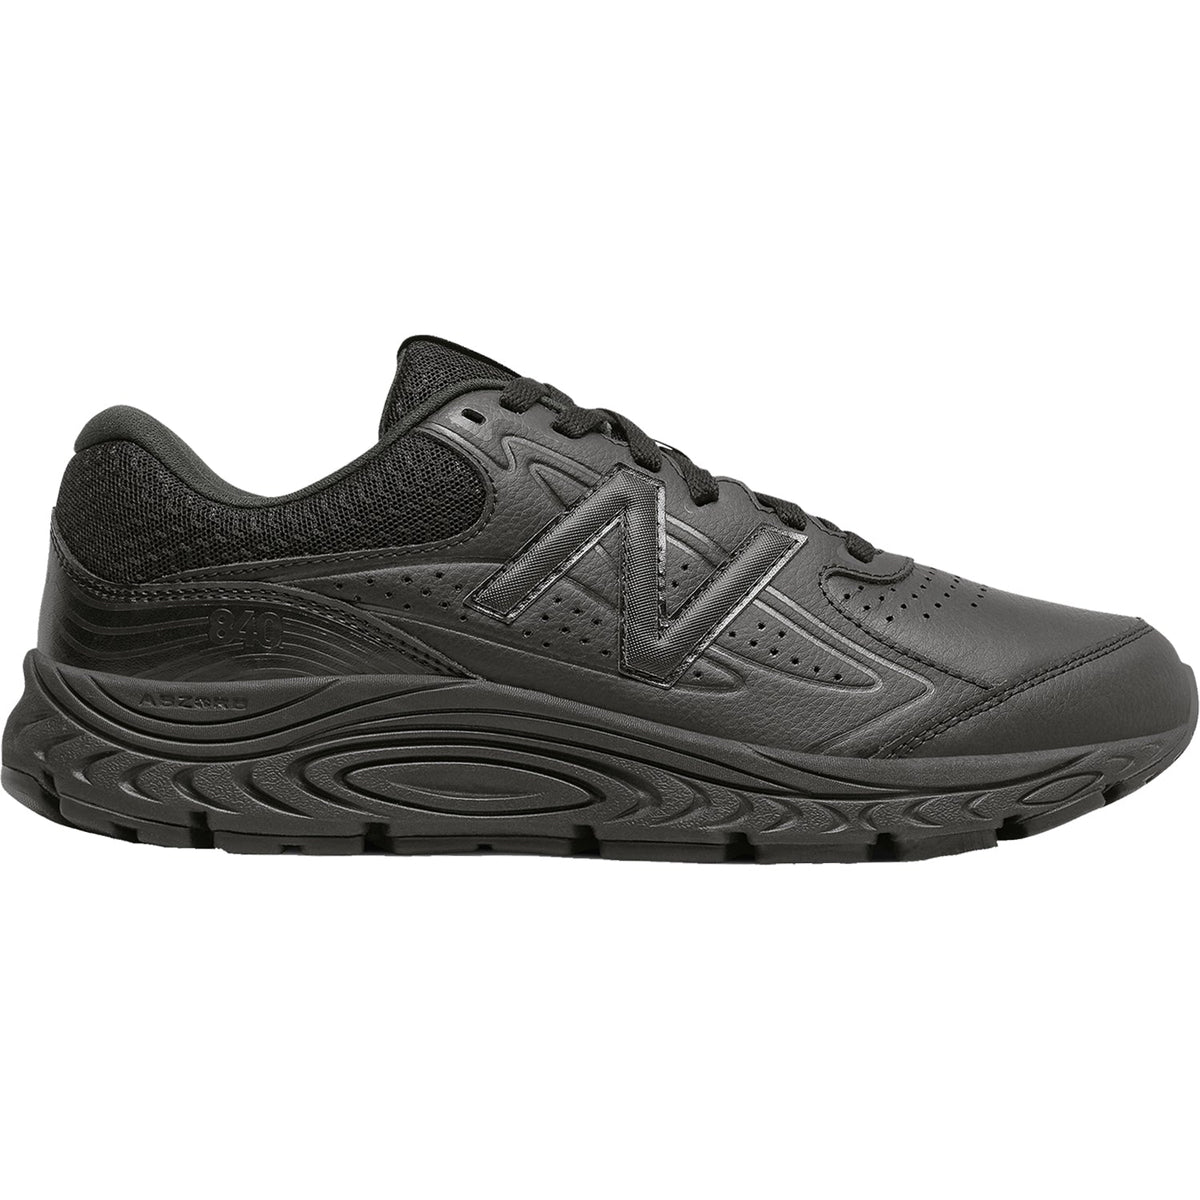 New Balance MW840v3 | Men's Walking Shoes | Footwear etc.